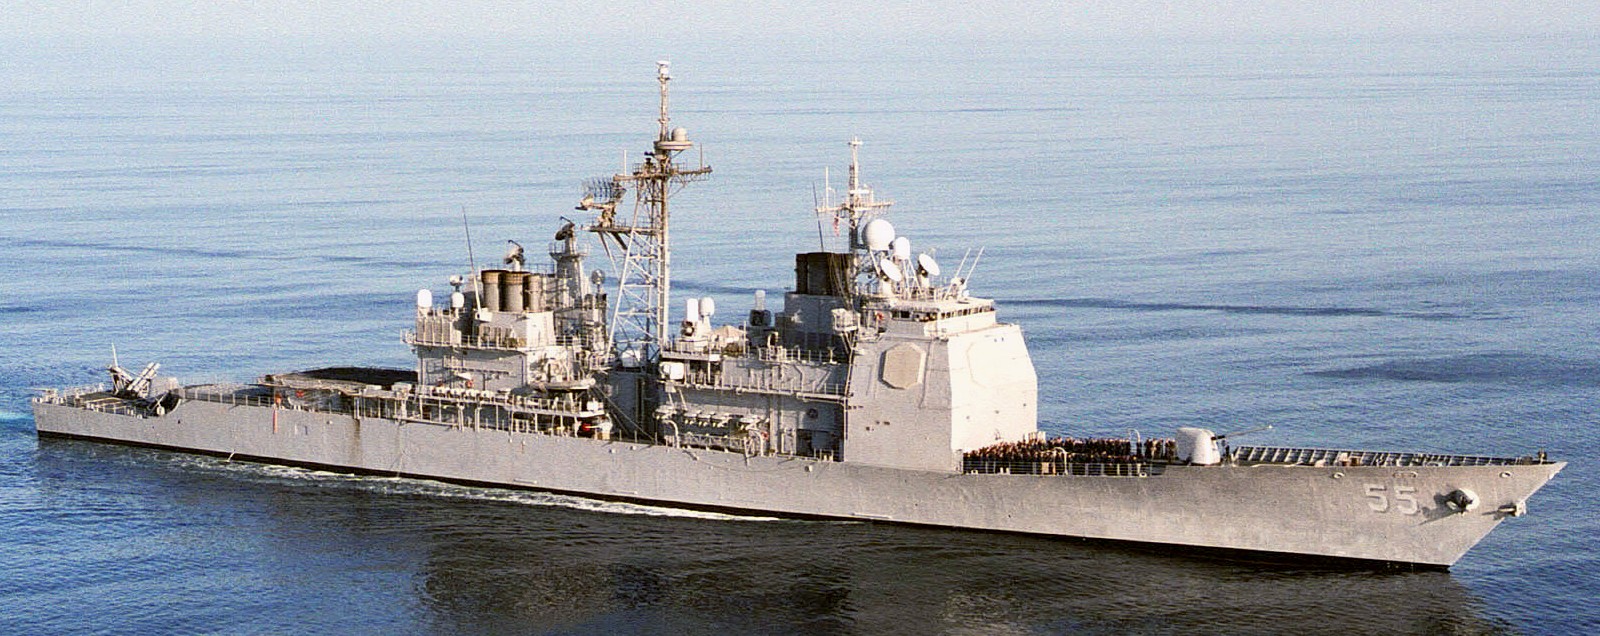 cg-55 uss leyte gulf ticonderoga class guided missile cruiser aegis us navy operation enduring freedom 22